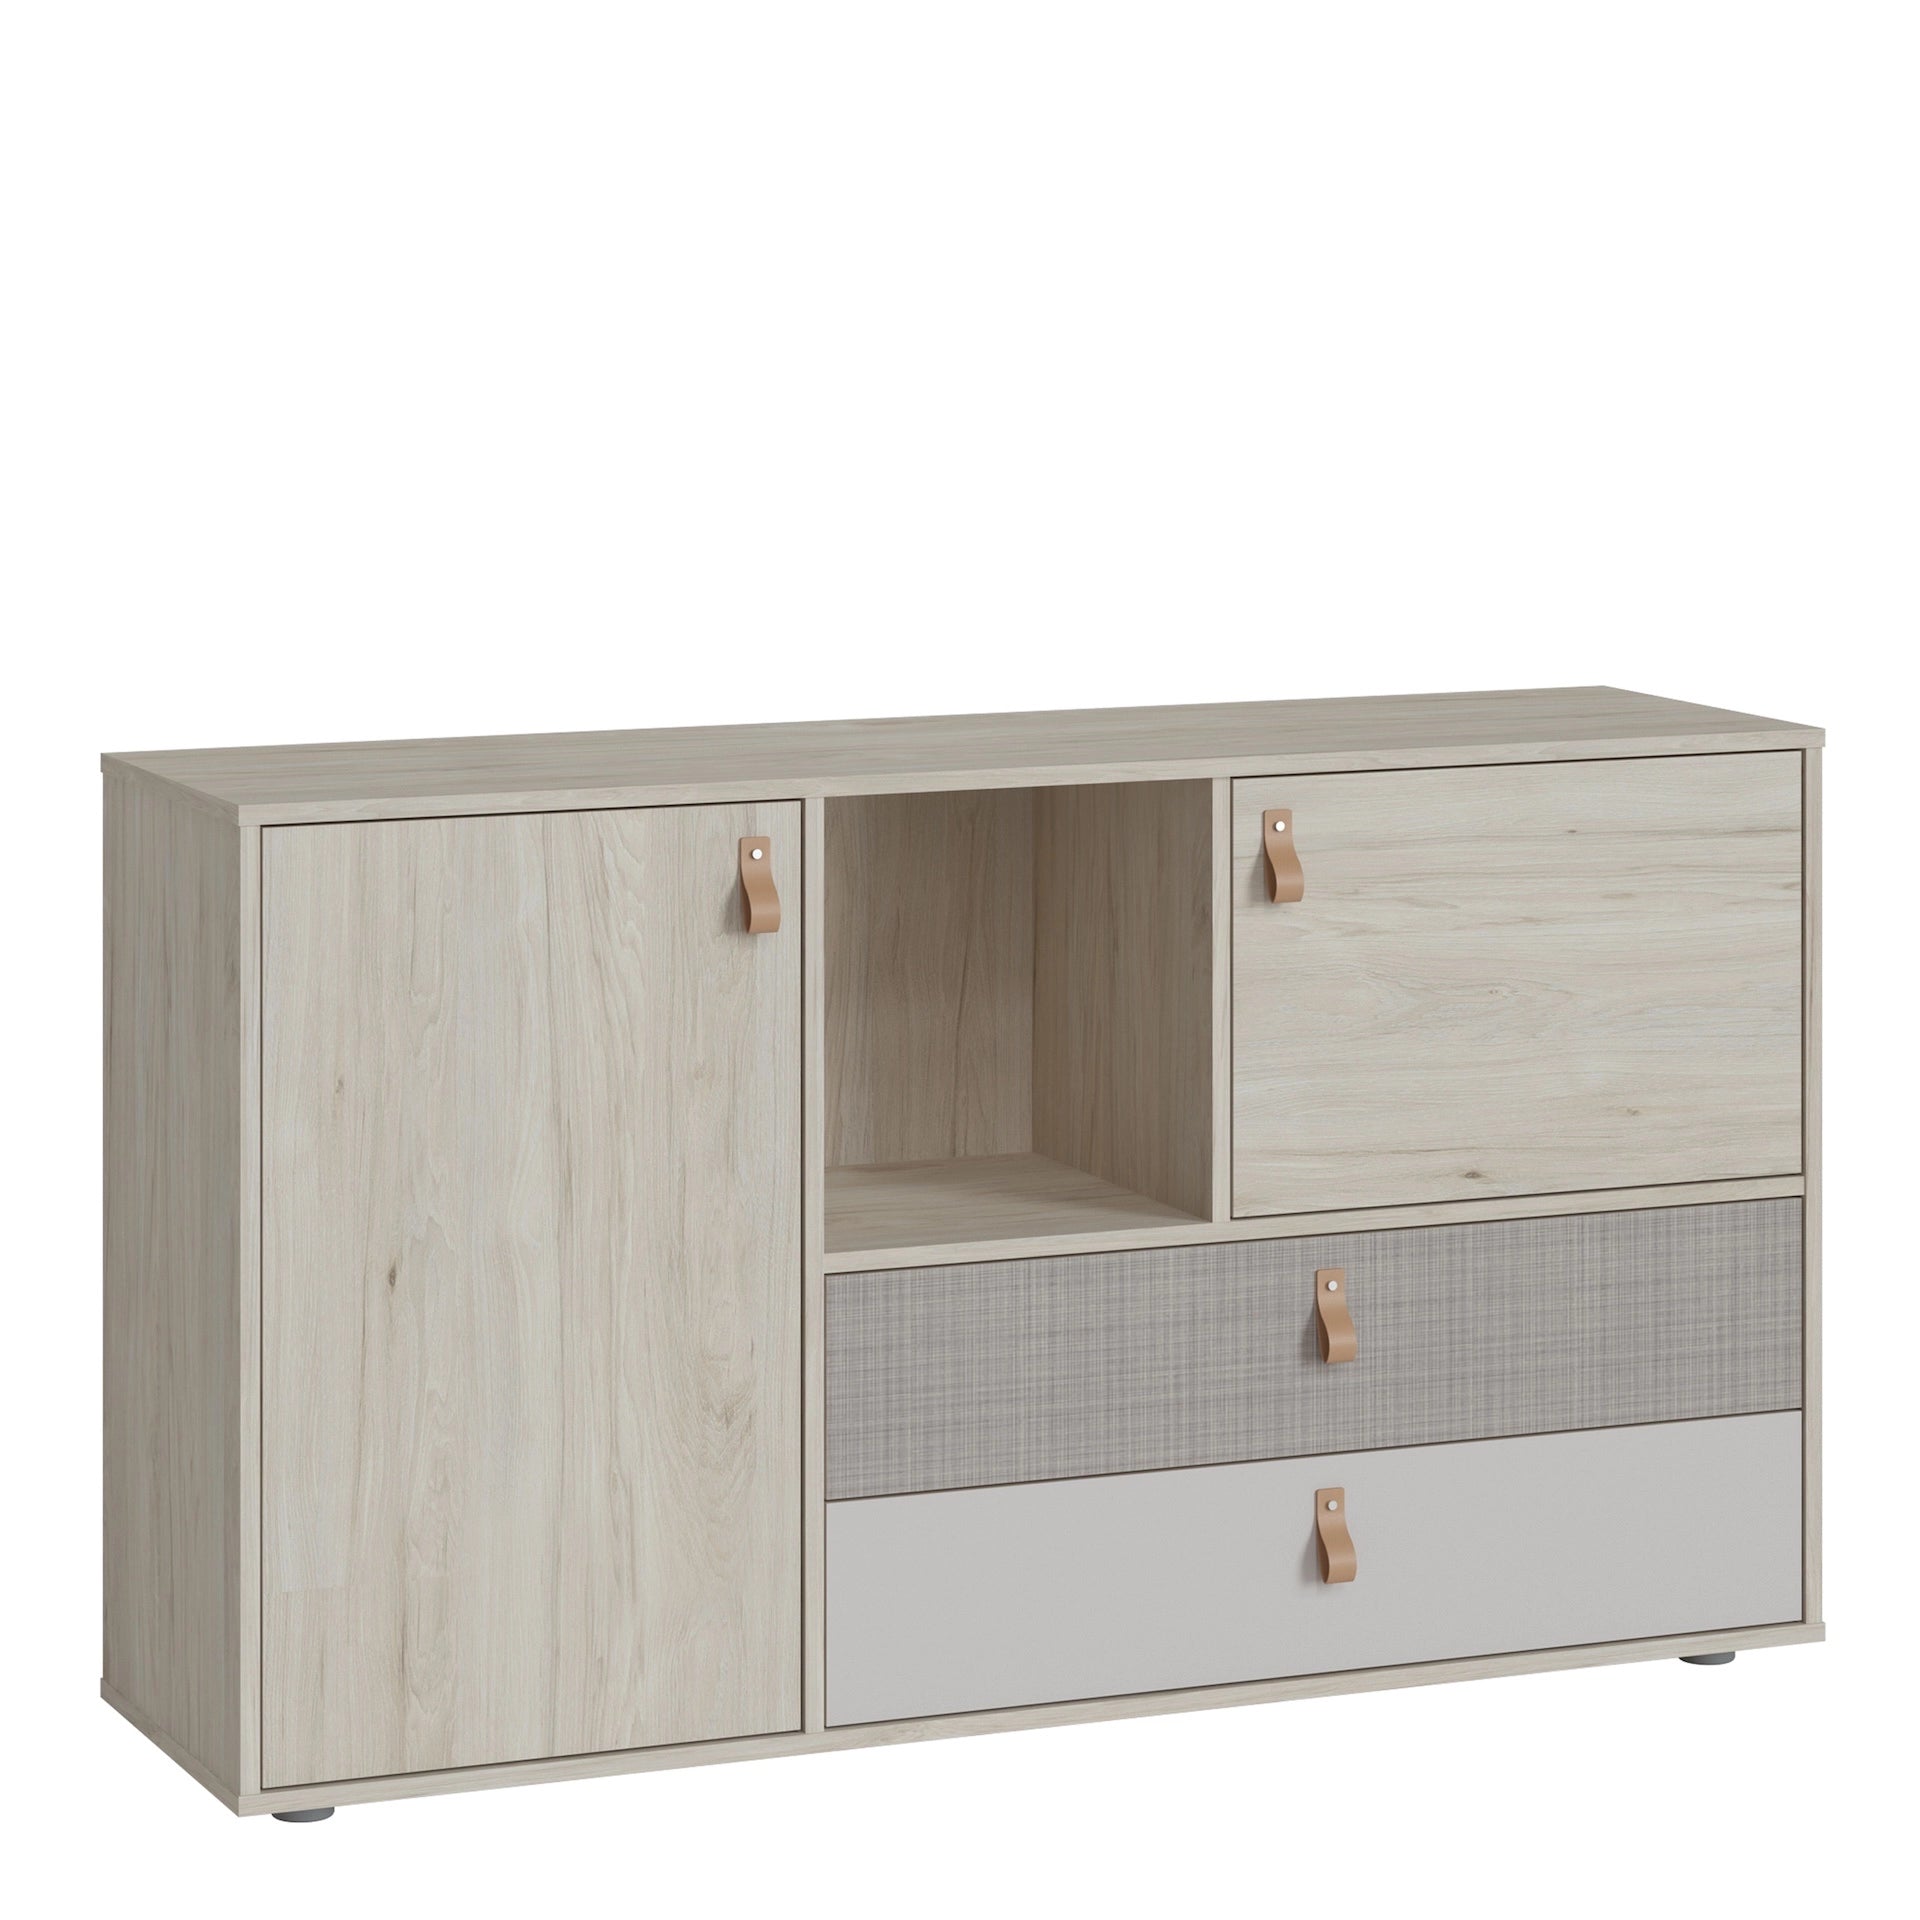 Furniture To Go Denim 2 Door 2 Drawer Sideboard in Light Walnut, Grey Fabric Effect & Cashmere